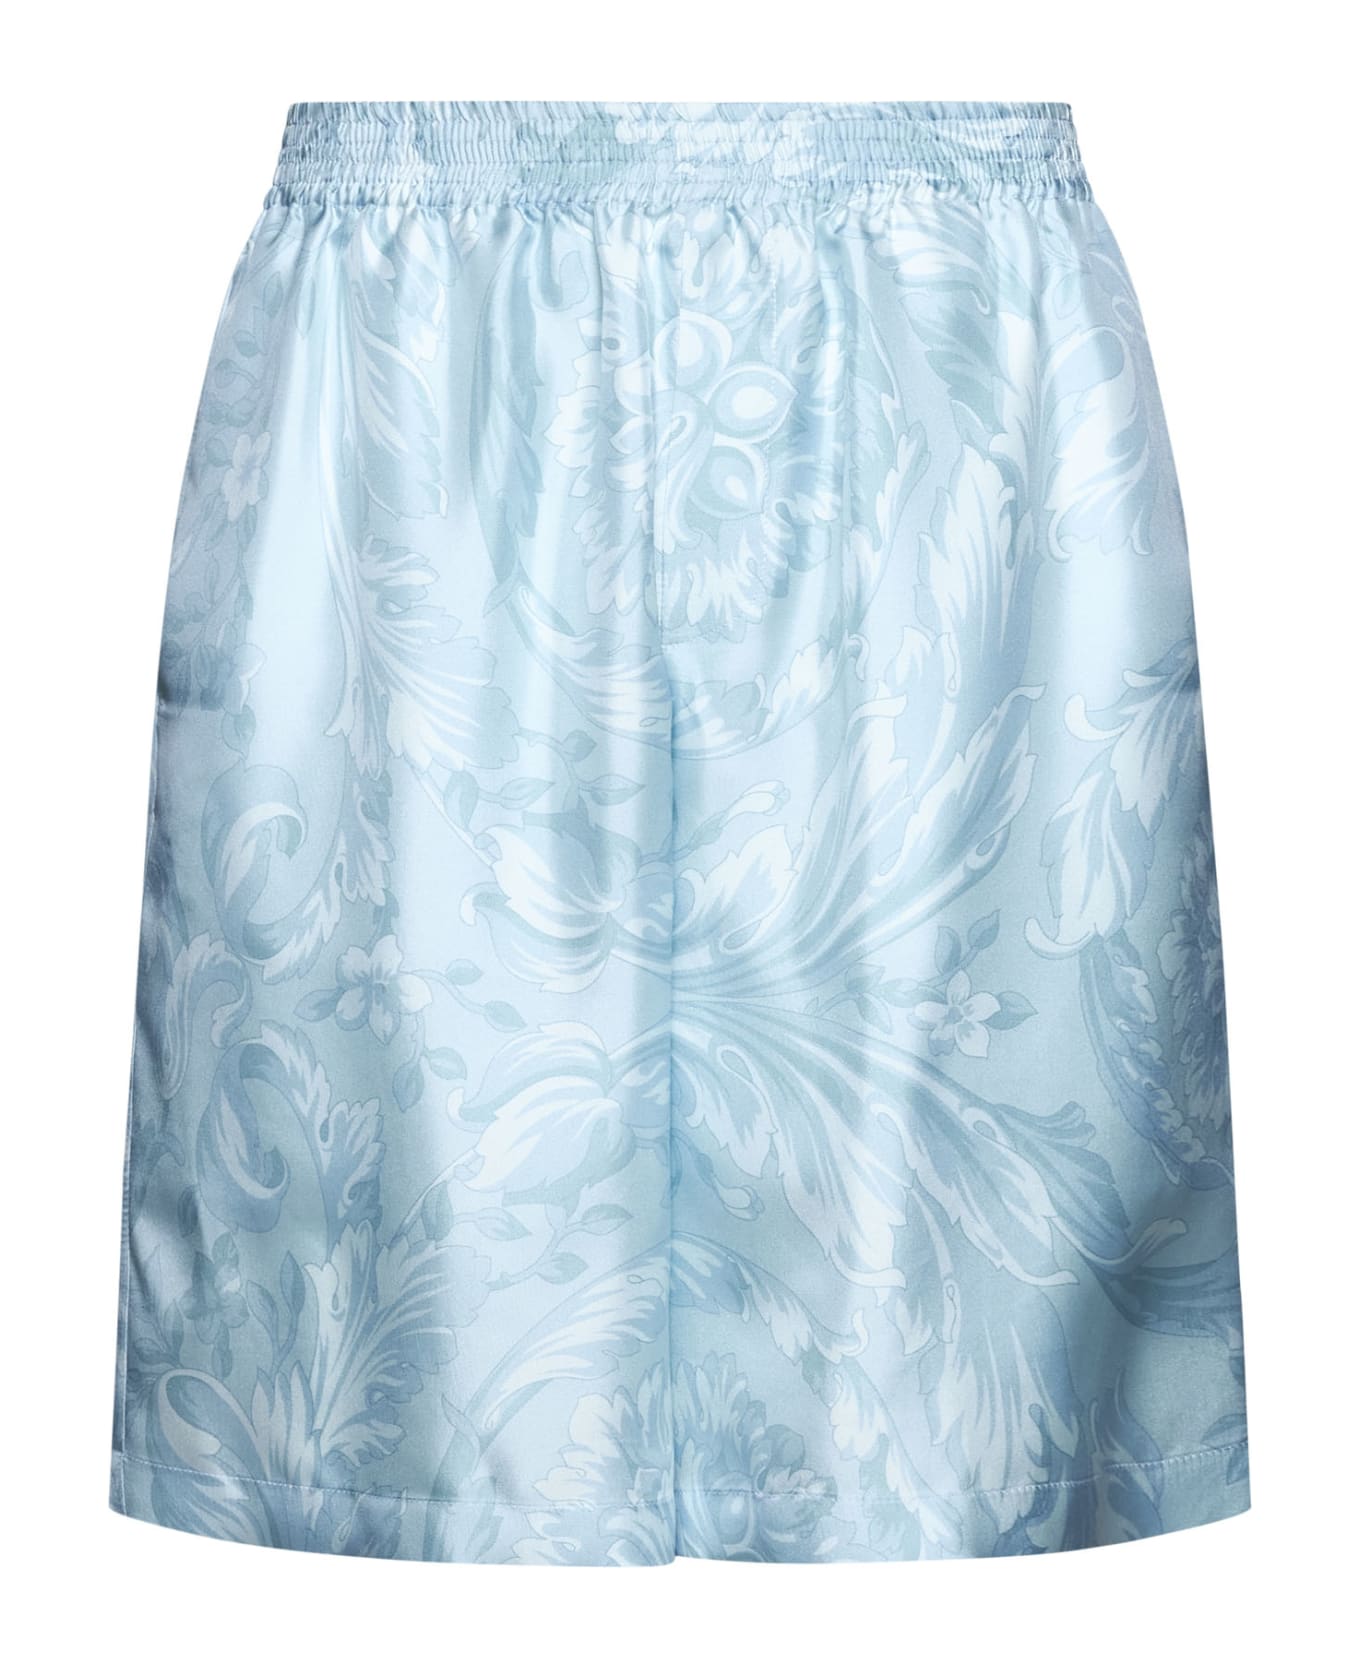 Versace Barocco Shorts - Pale blue